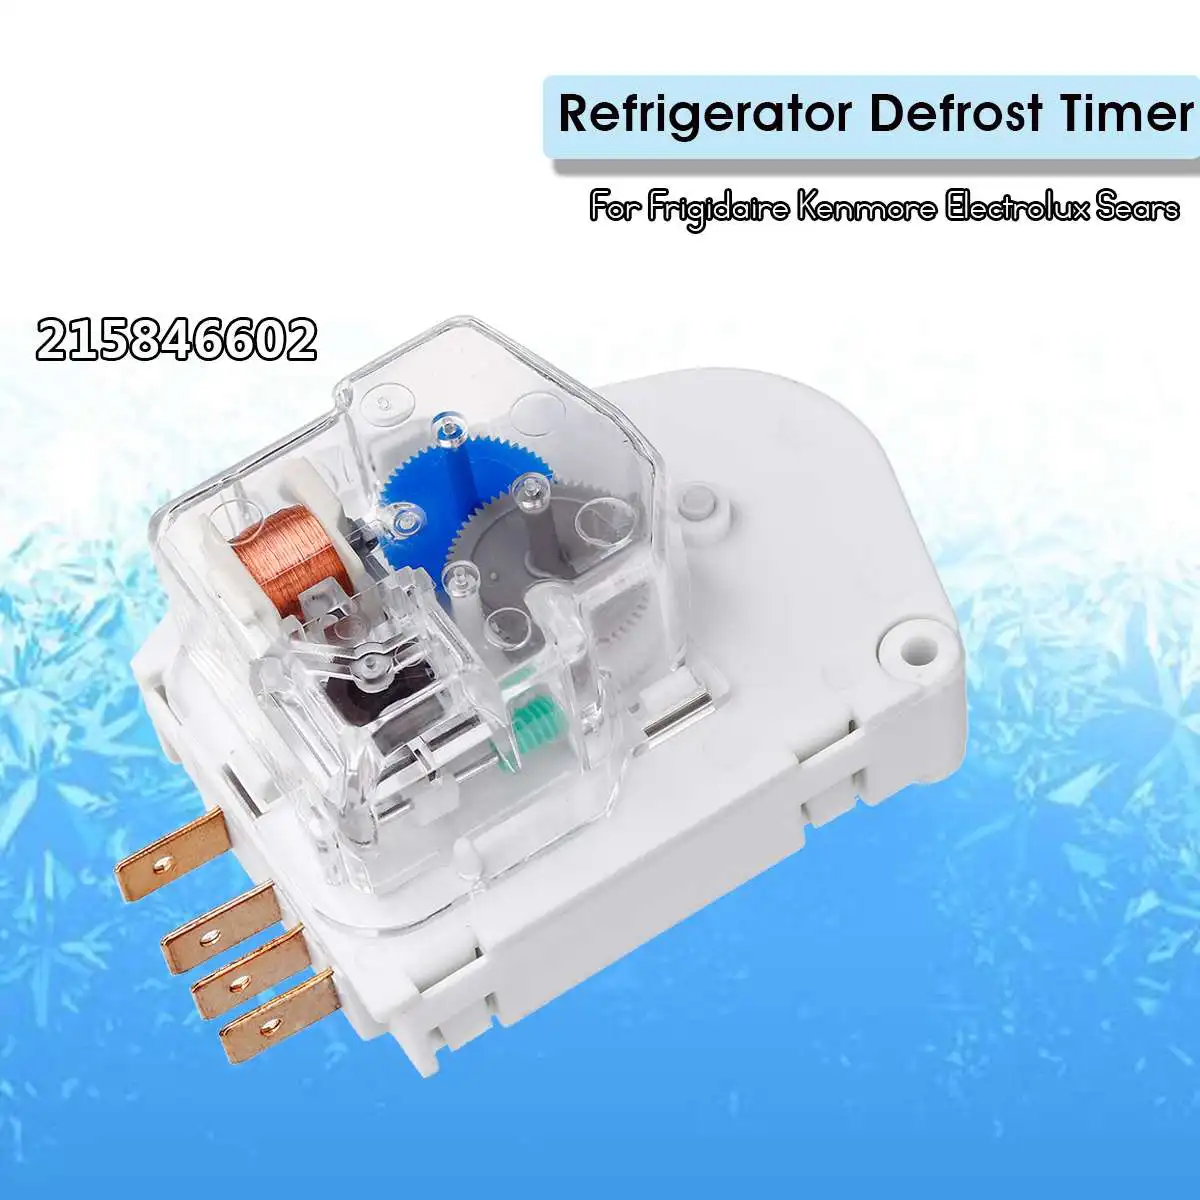 215846602  Frigidaire Refrigerator  Defrost Timer free shipping 